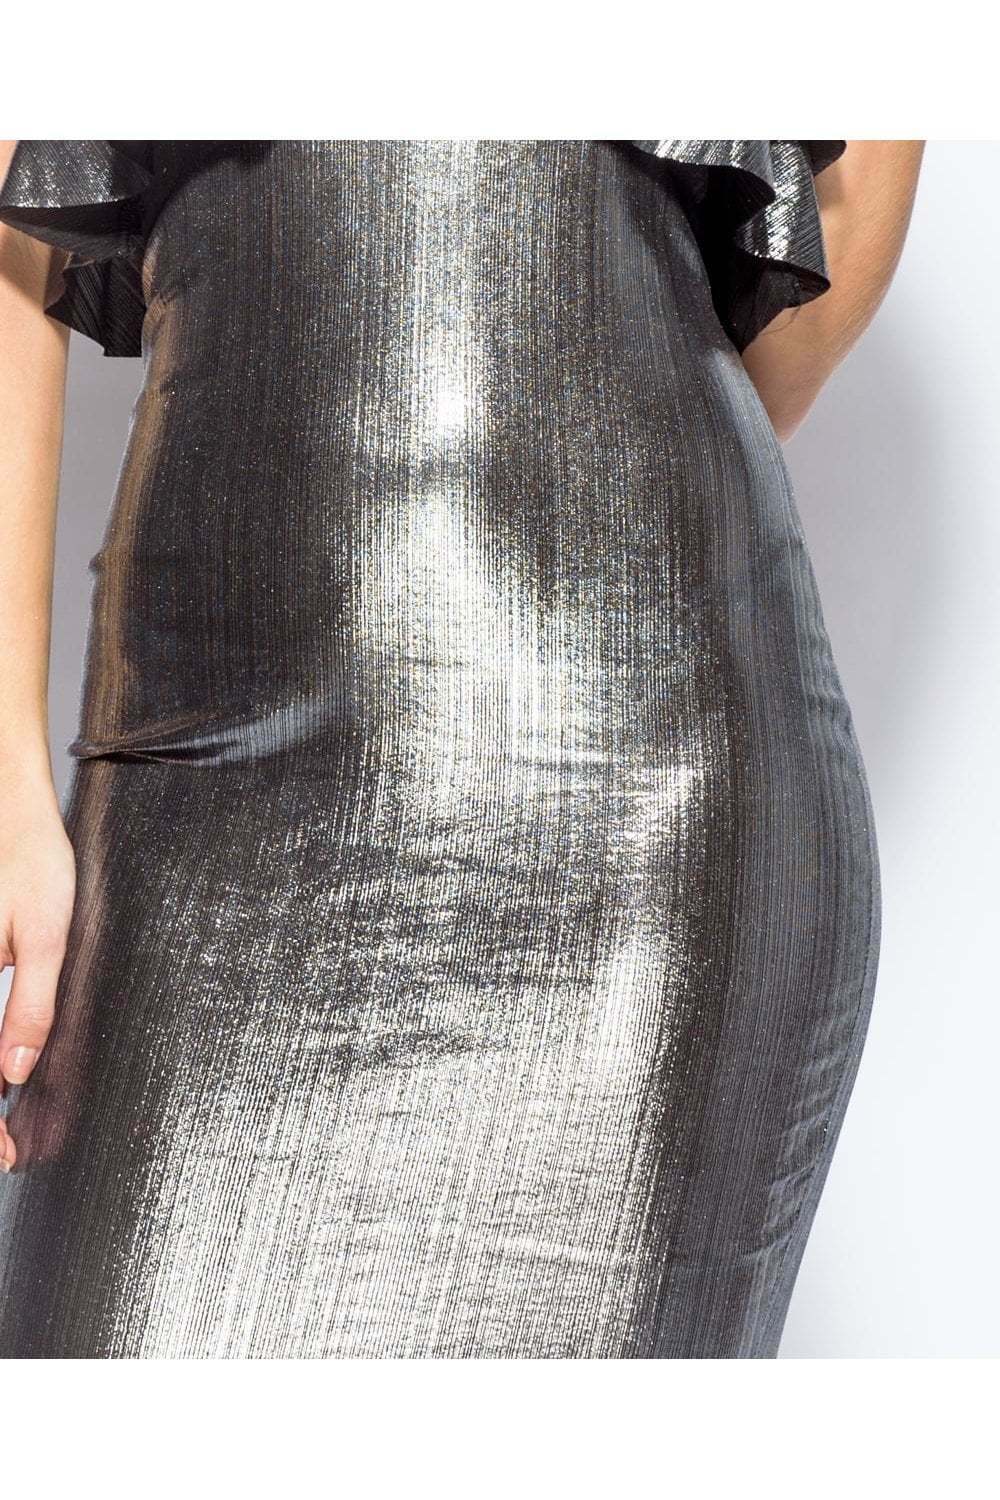 Metallic Frill Detail Bodycon Midi Dress in Silver - Close Up View